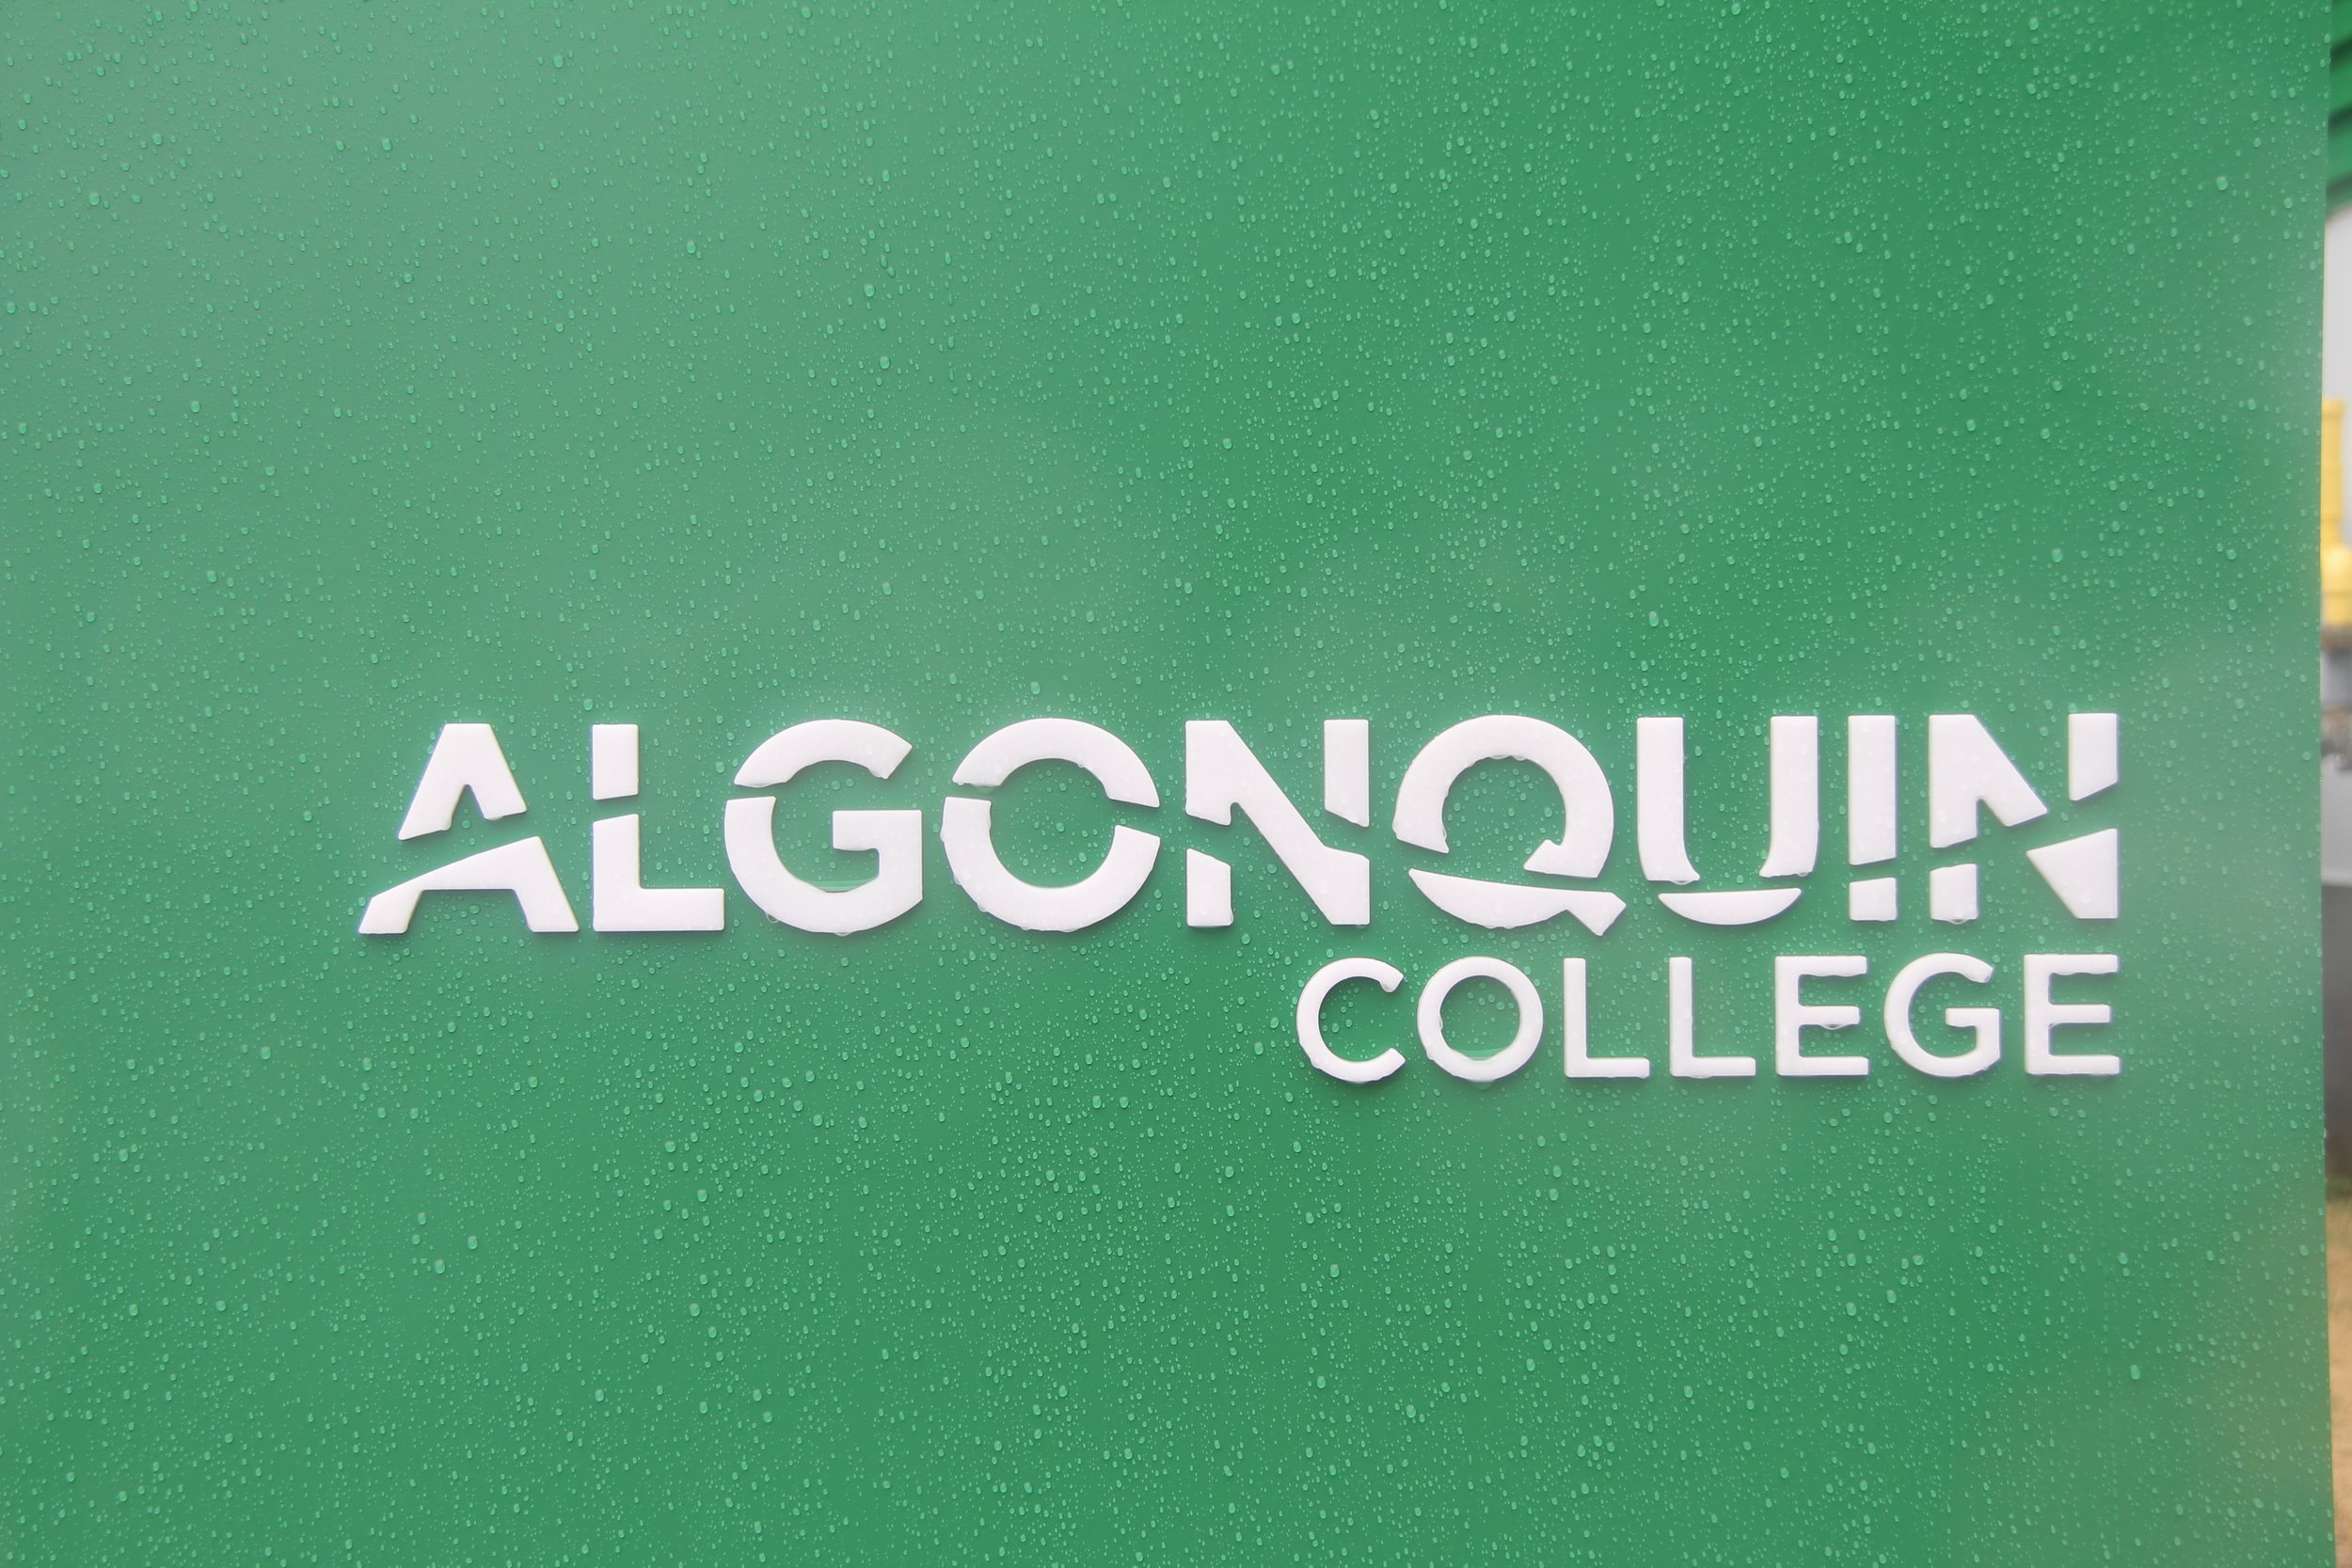 Signage - Algonquin College - credit Fathom Studio - MAY2019_5237.JPG